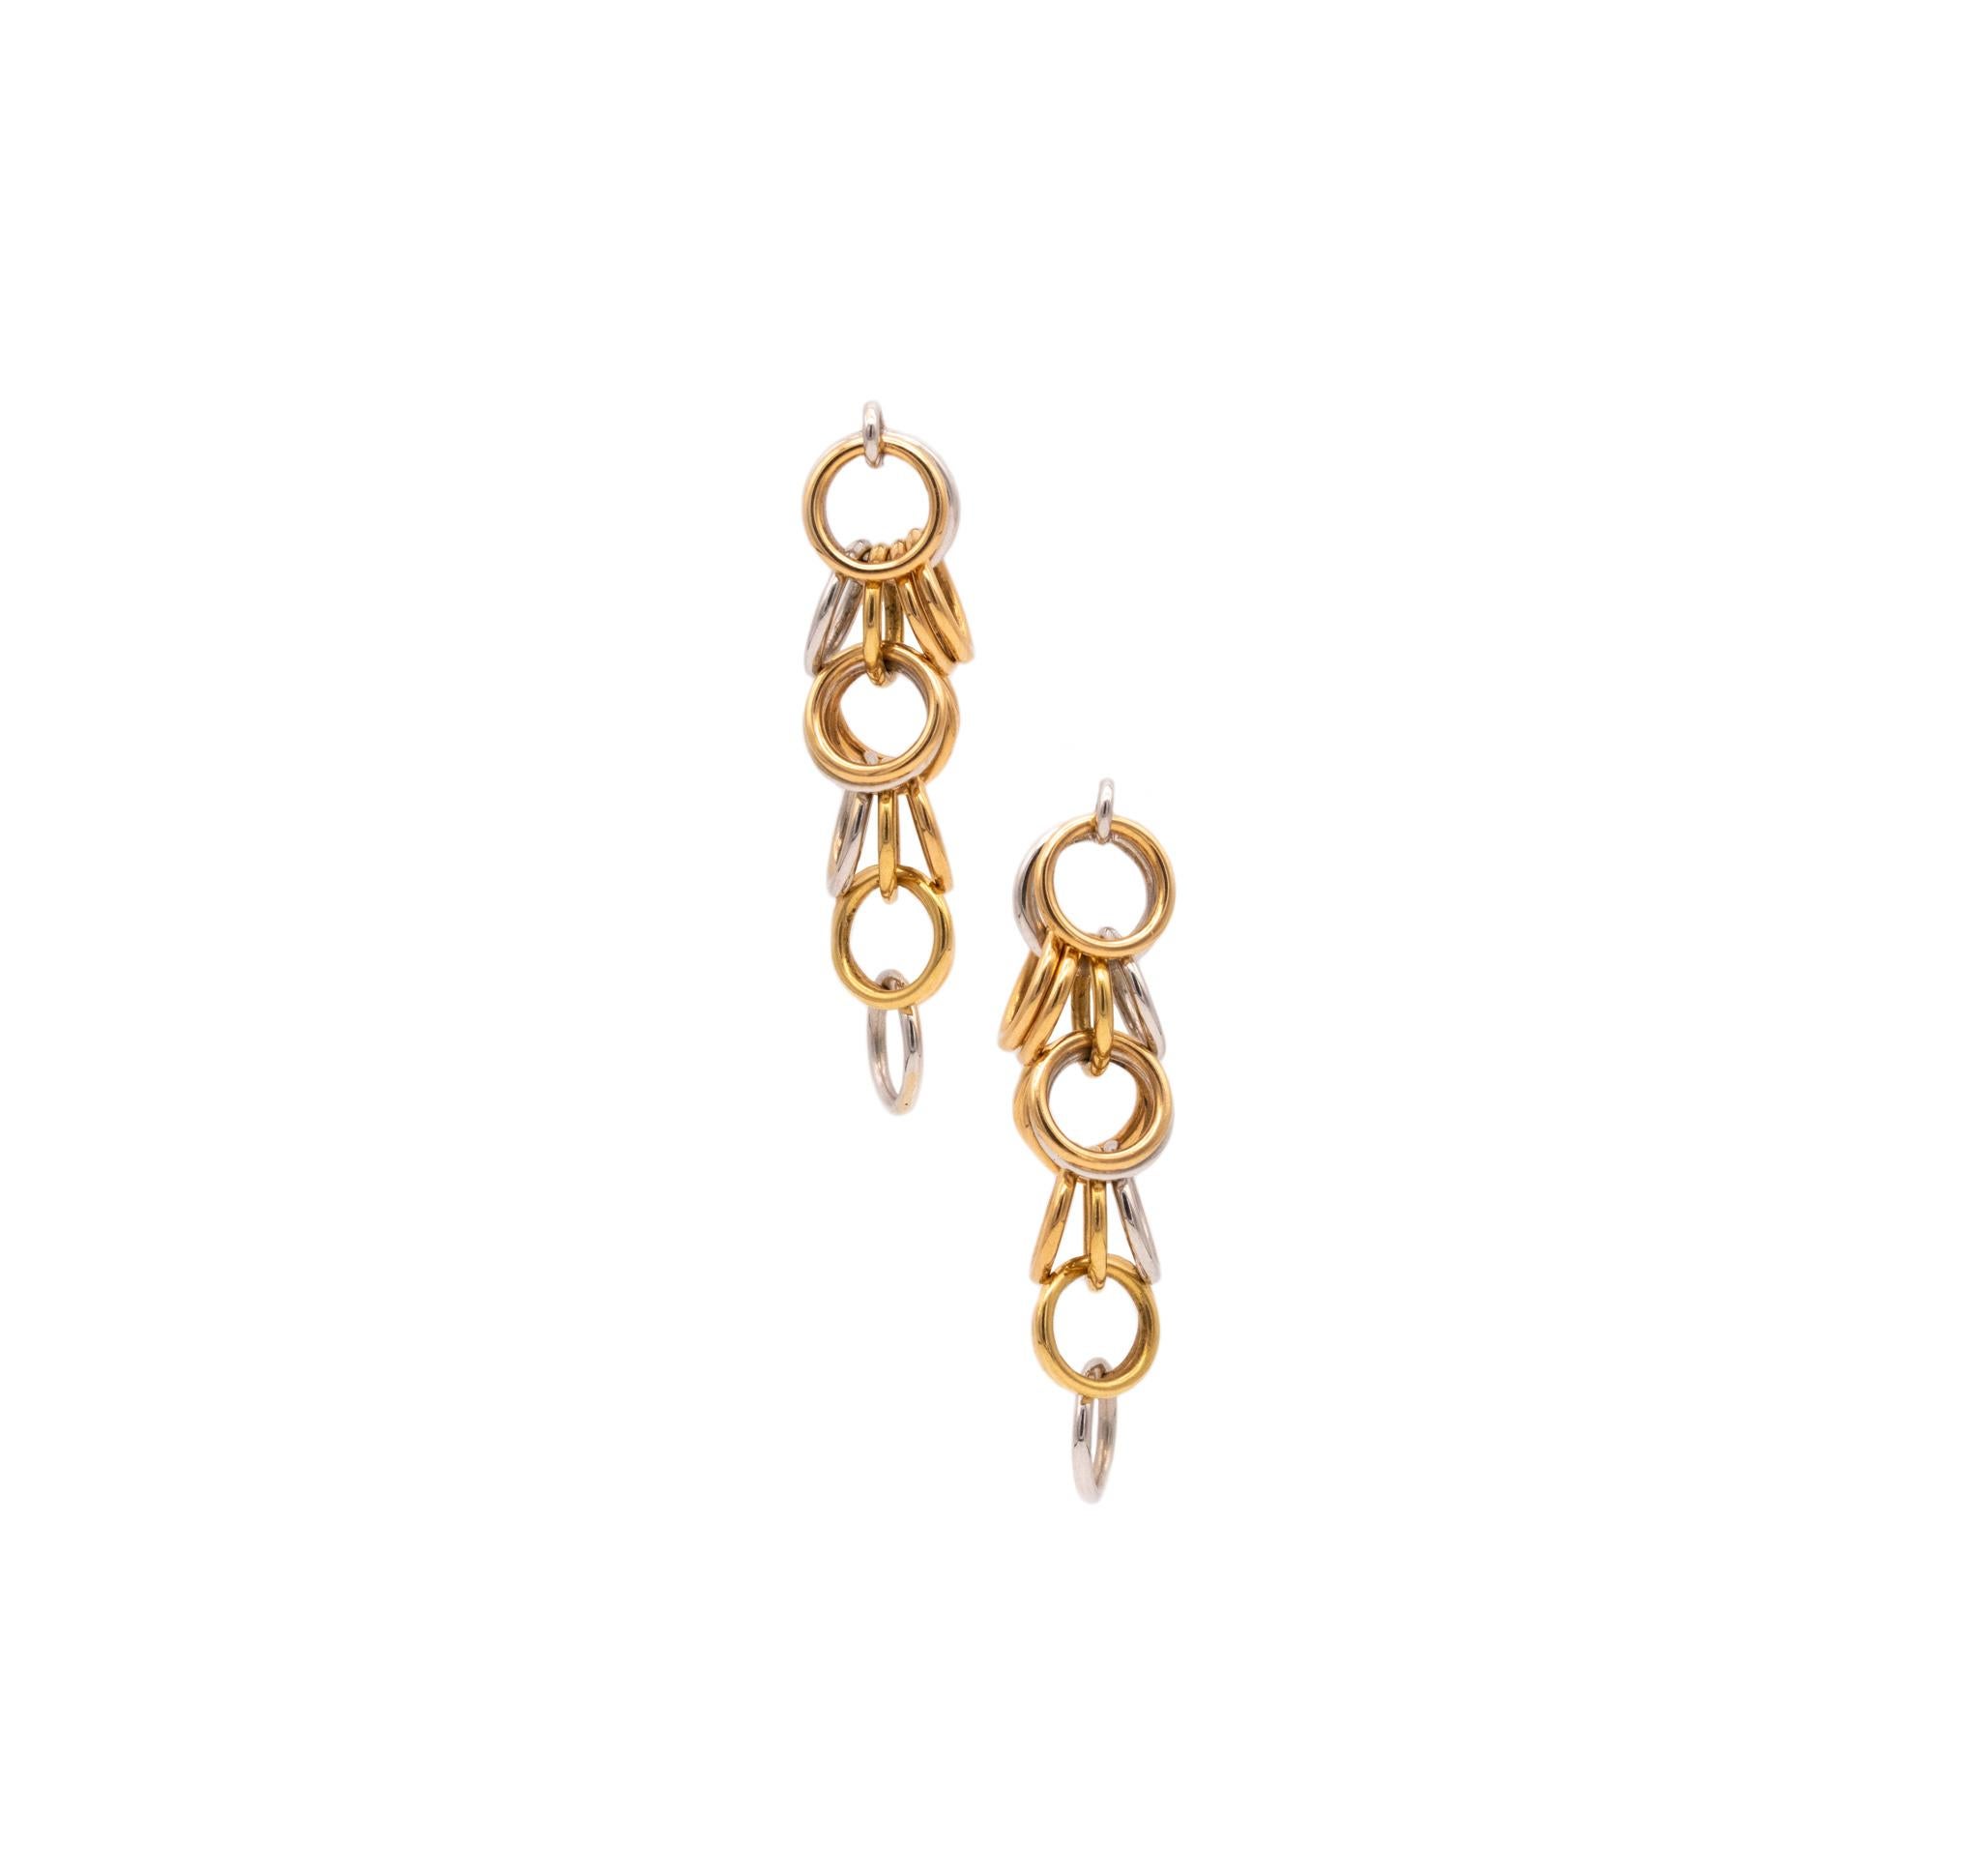 Hermes Paris Geometric Kinetic Drop Earrings with Circles Links in 18kt Gold 1